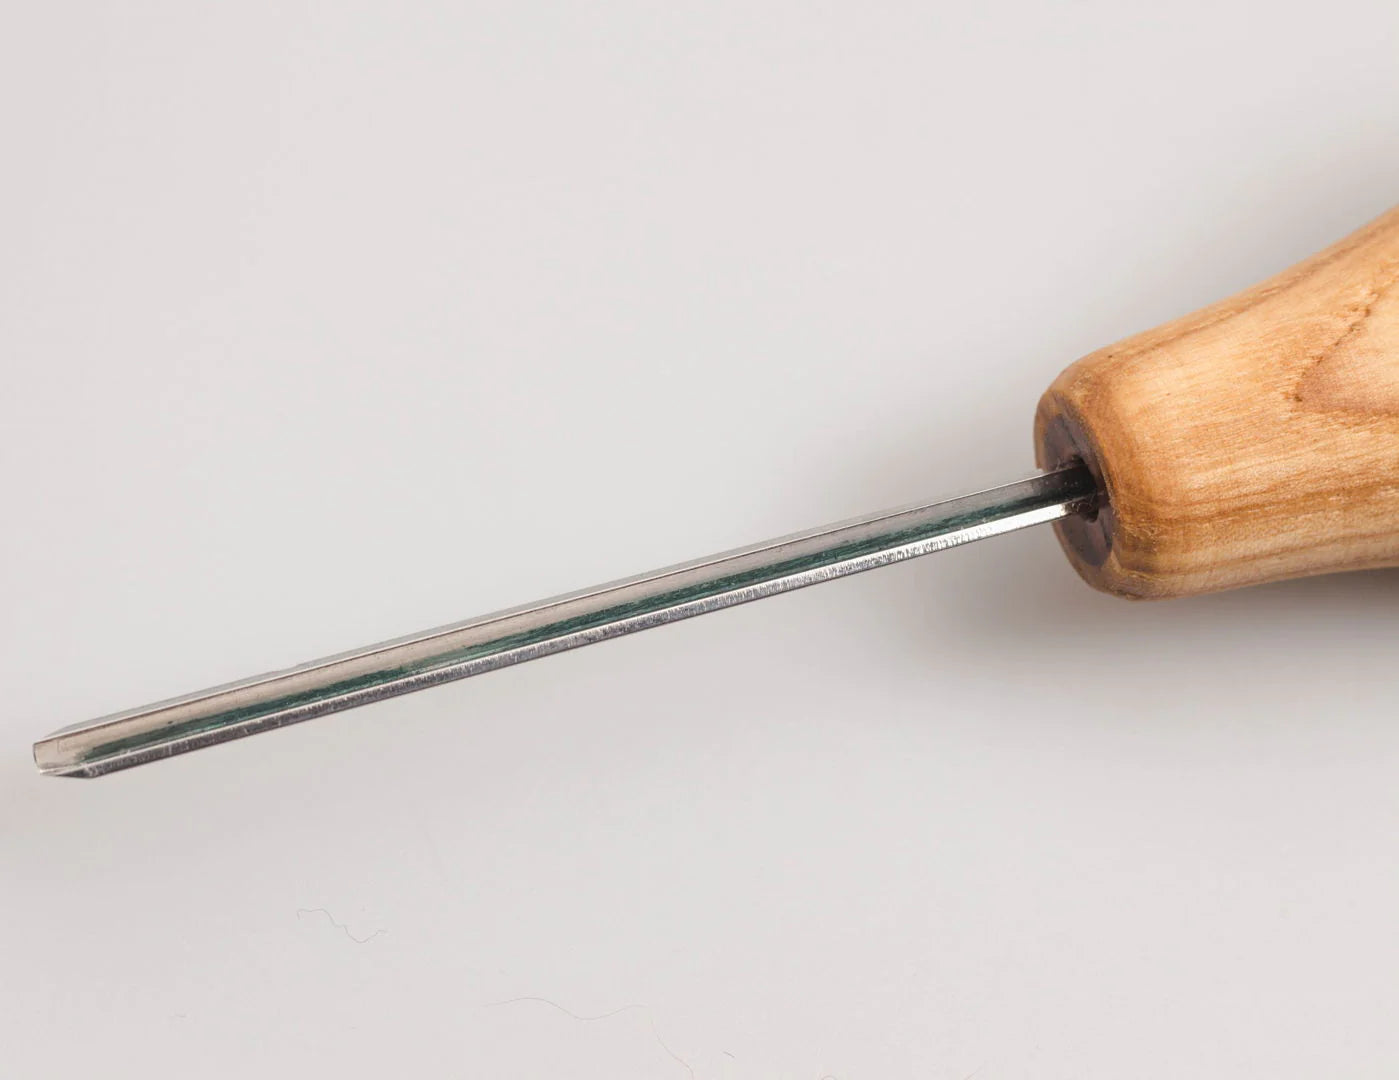 BeaverCraft P12/02 - Palm-size straight V-profile chisel. Sweep №12